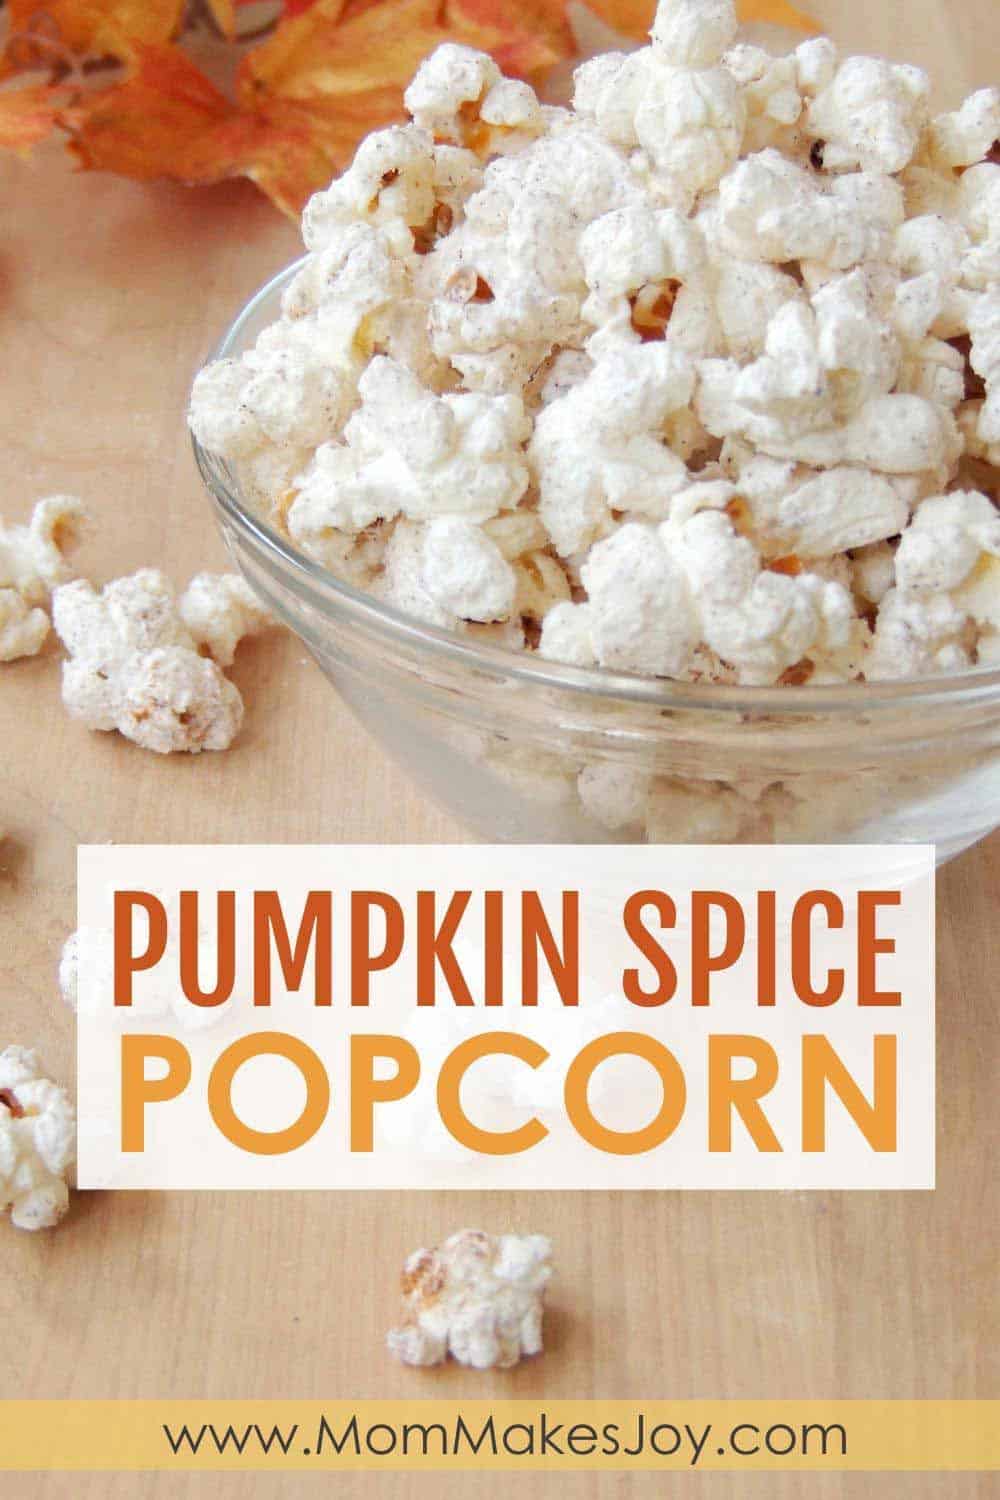 White Chocolate Pumpkin Spice Popcorn